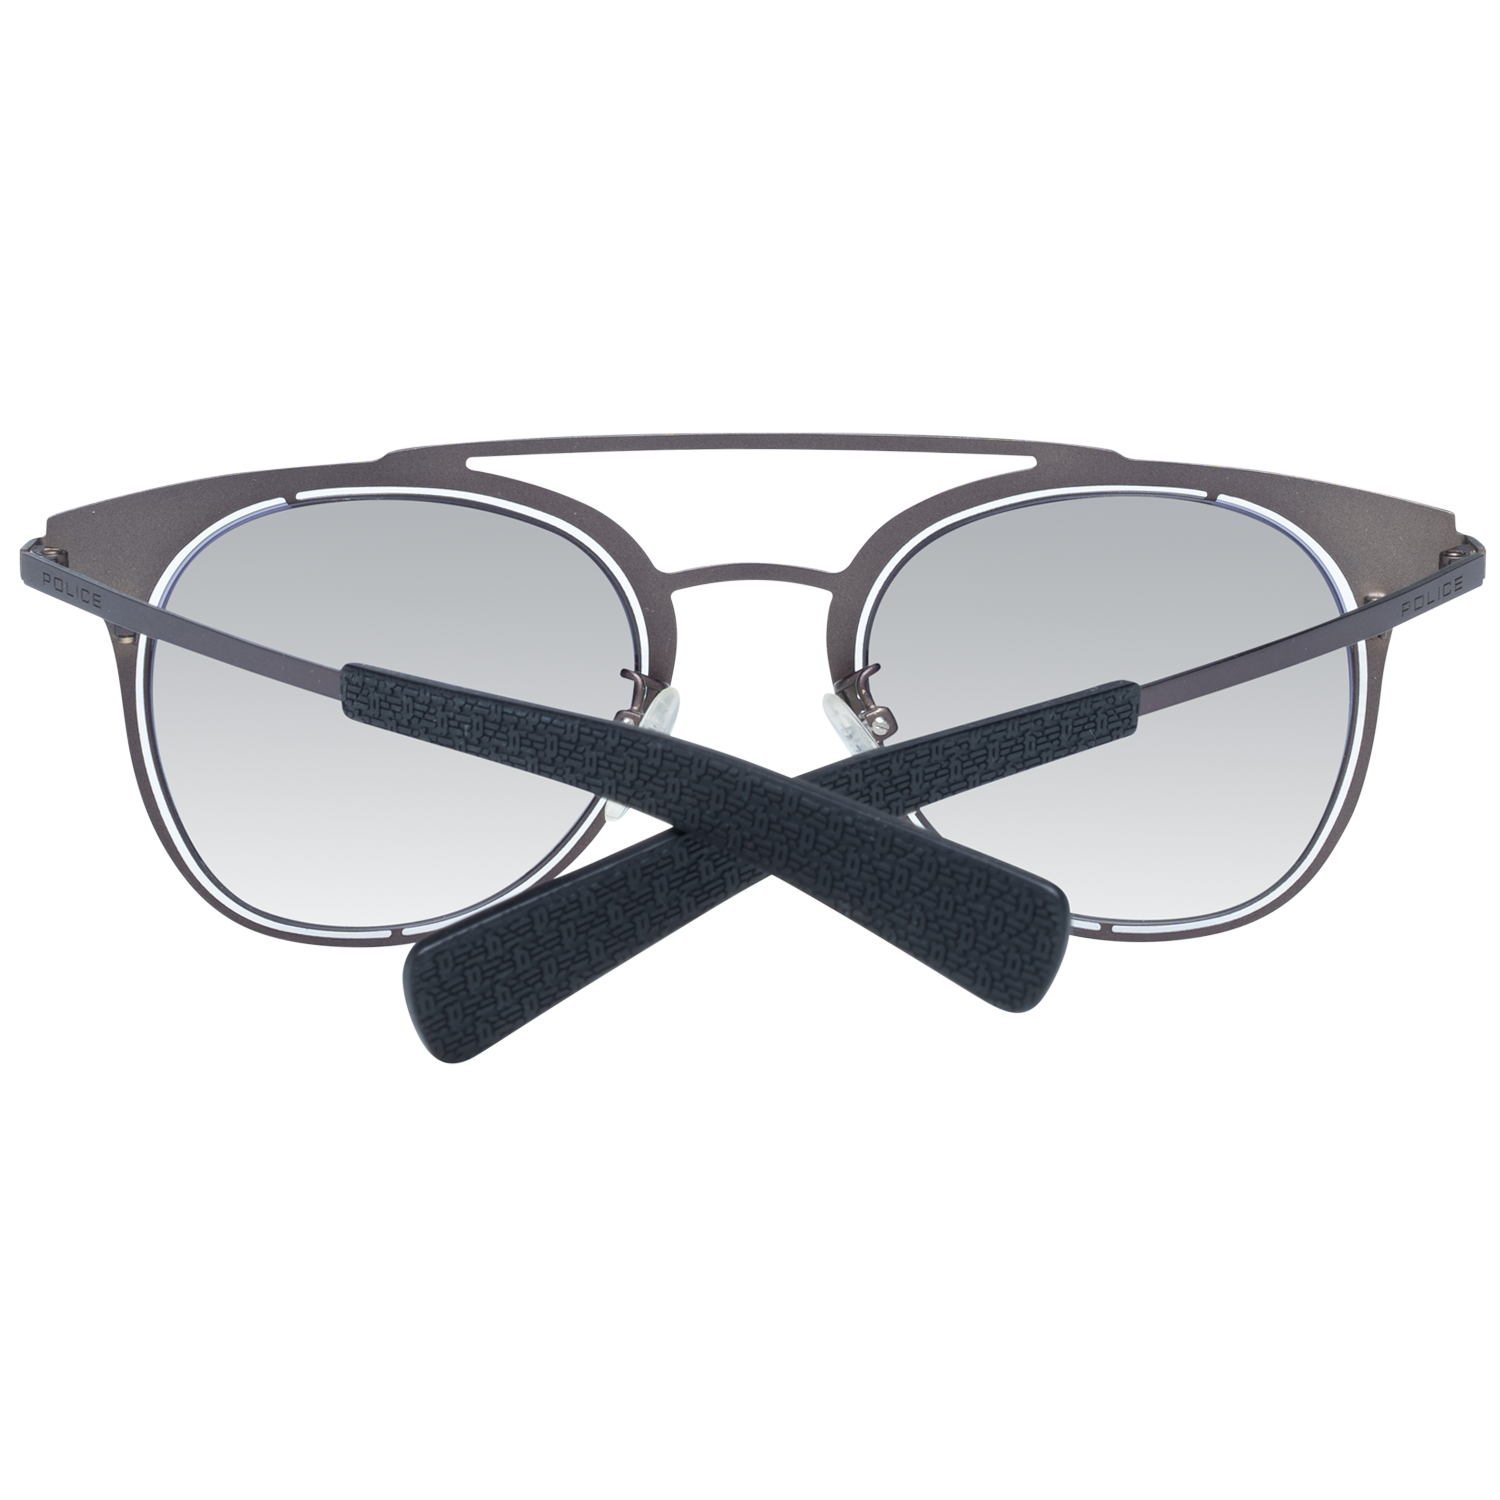 Buy Police Sunglasses  Vision Direct Australia